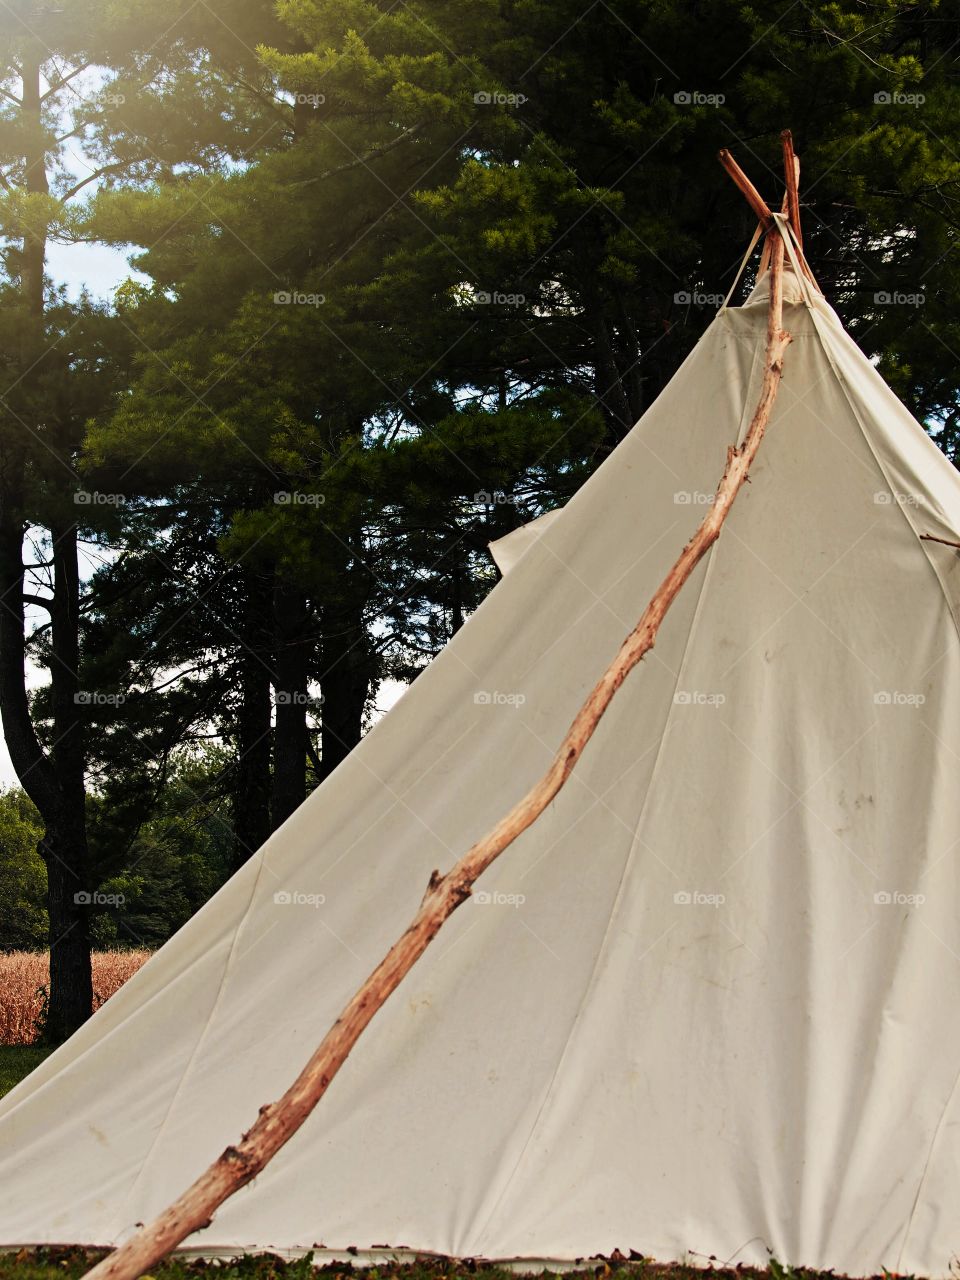 Civil War Tent. Civil War encampment in Clayville, IL.